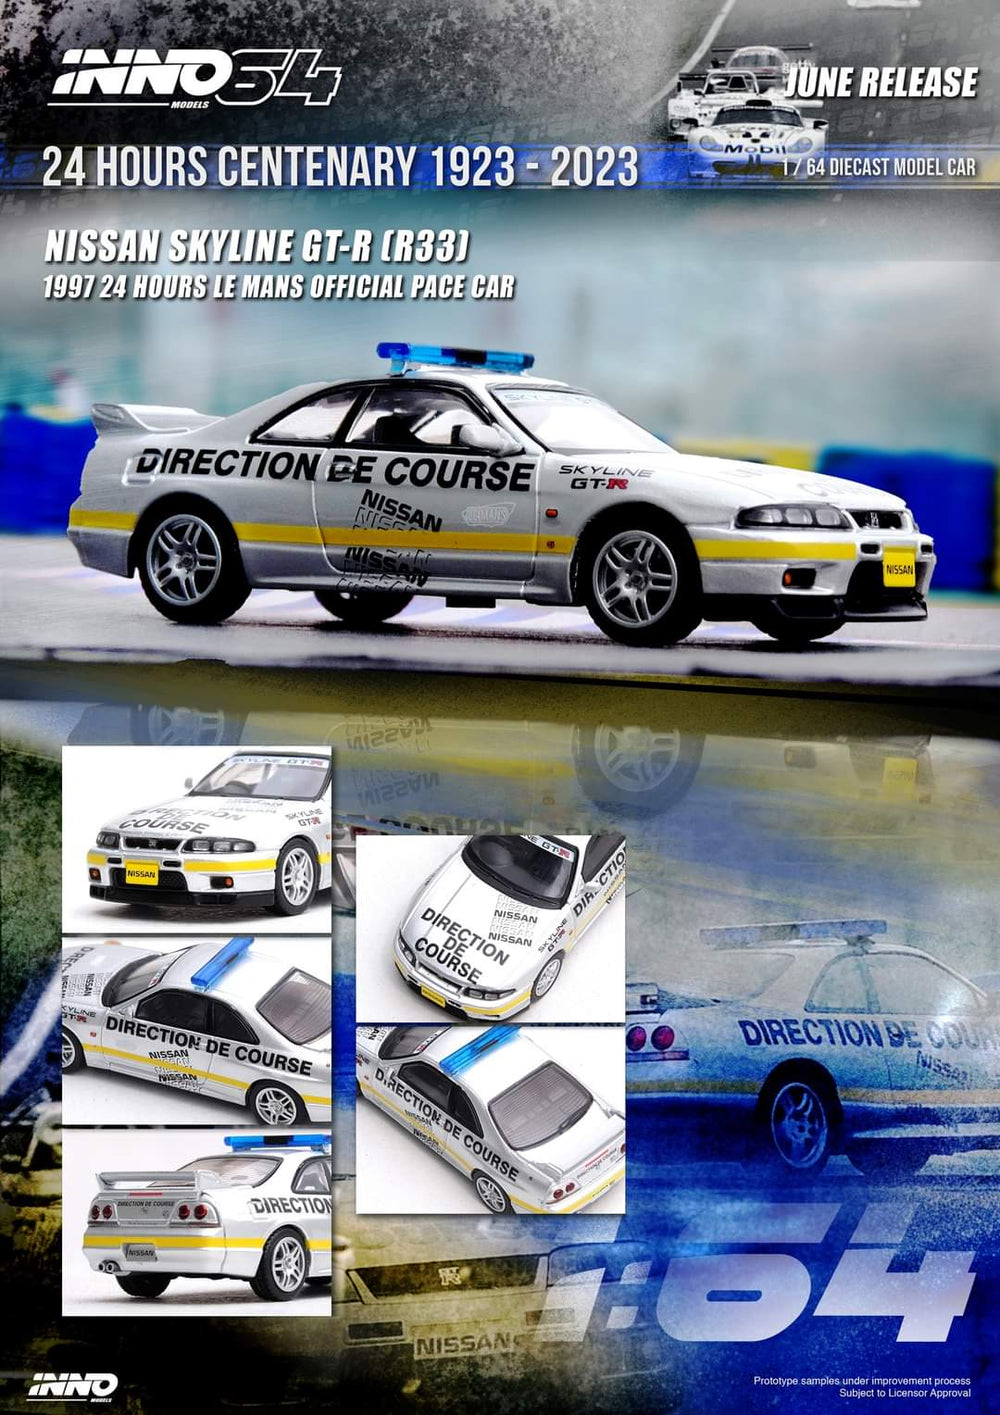 NISSAN SKYLINE GT-R (R33) 
24 Hours Le Mans Offical Pace Car 1997